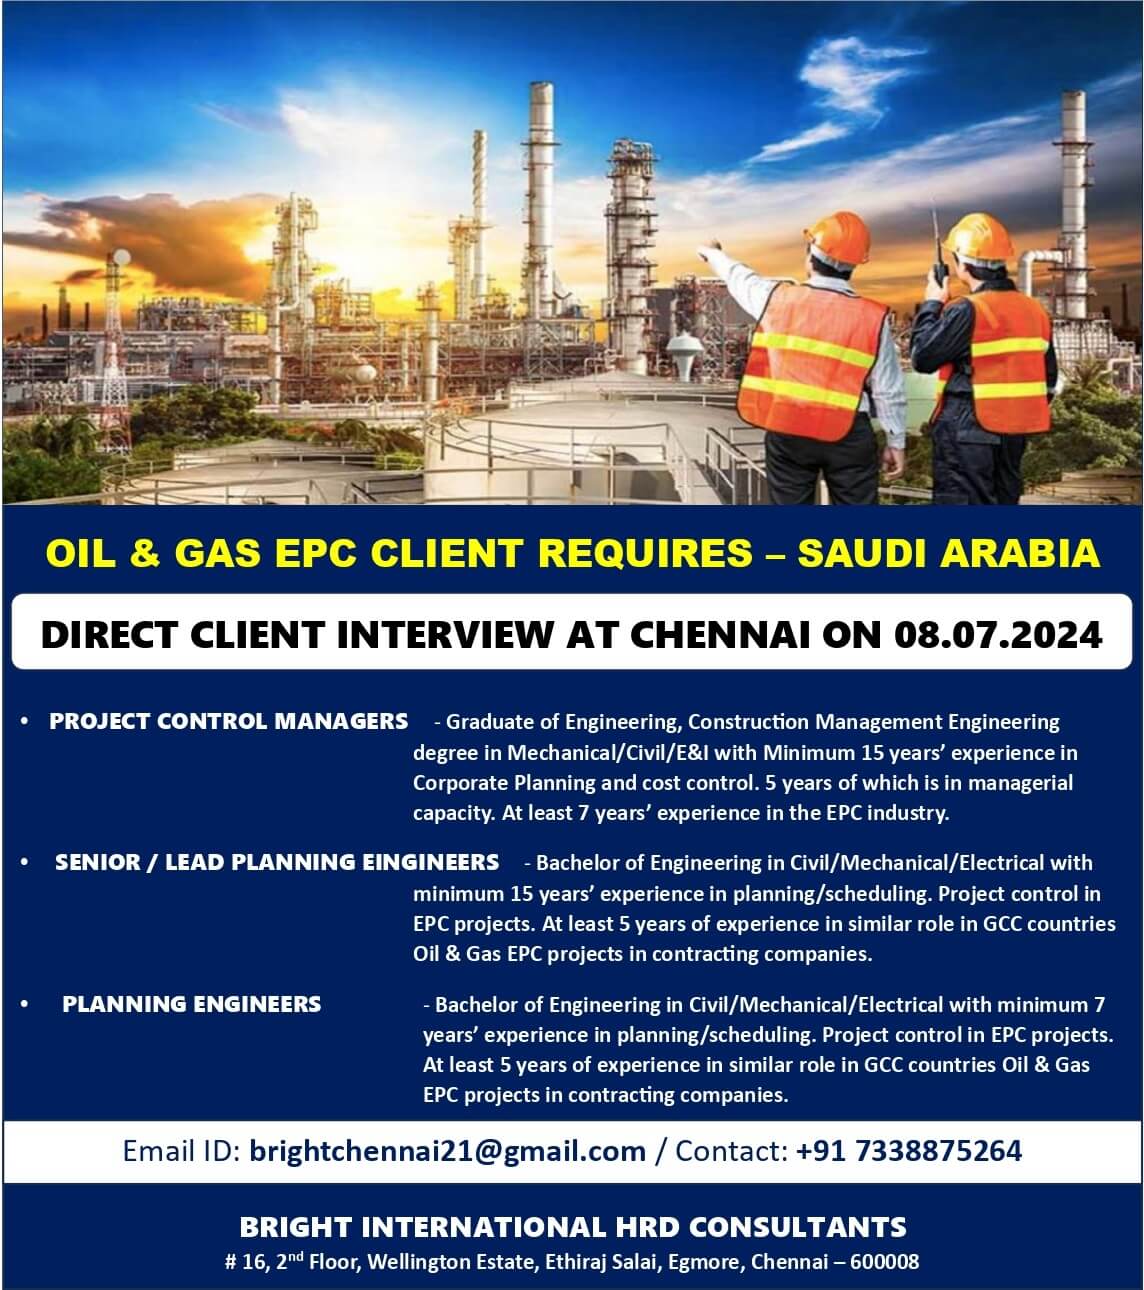 LEADING OIL & GAS EPC CLIENT REQUIRES